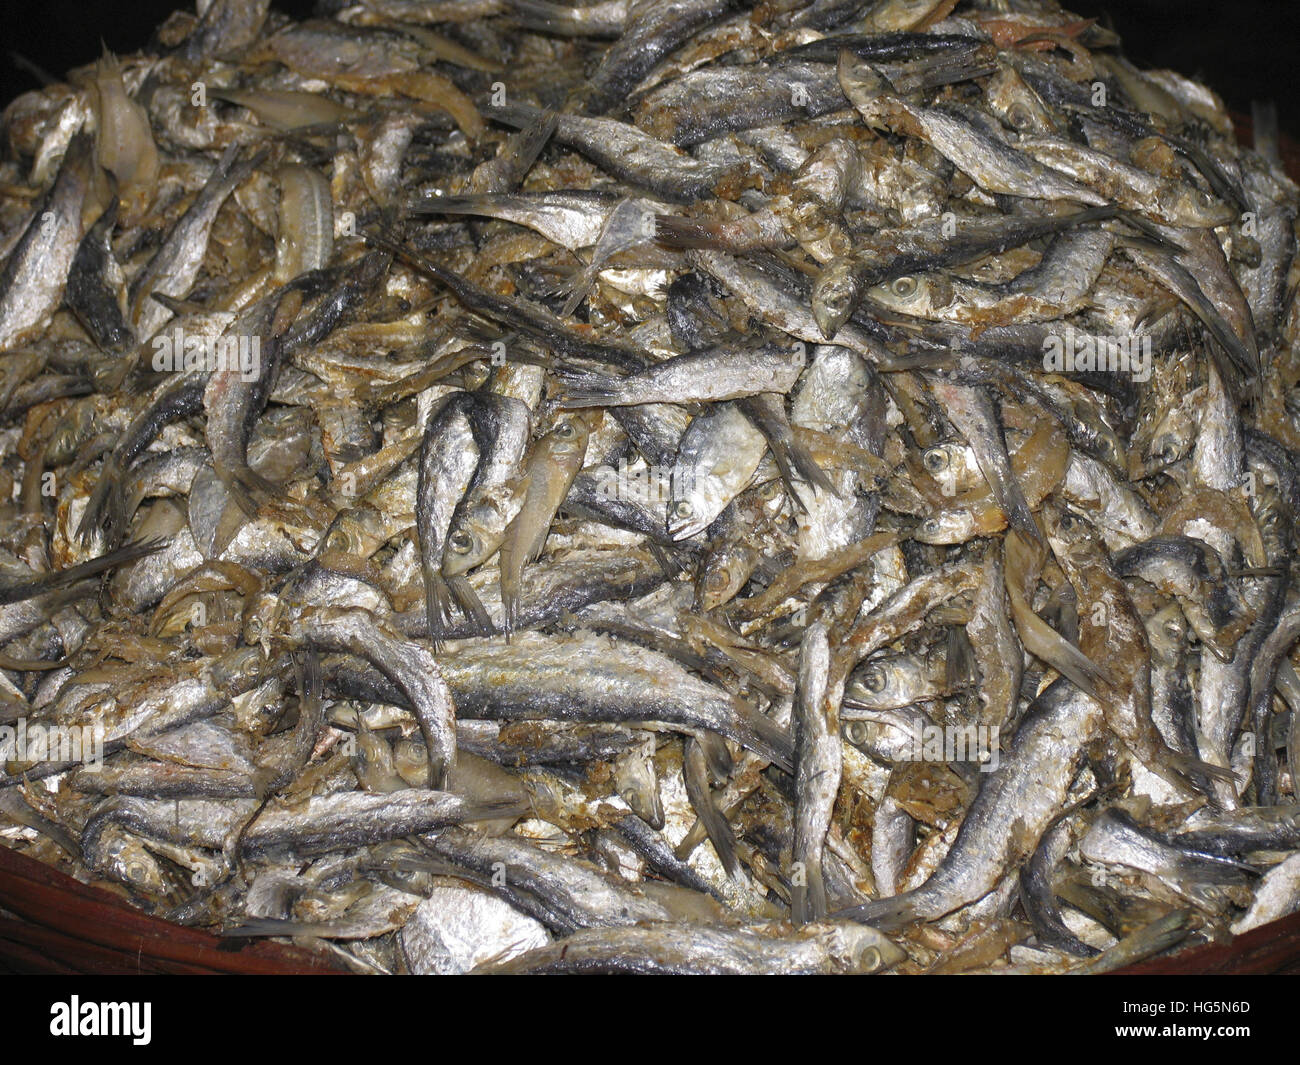 Dry Fish for sale. Kerala, India Stock Photo